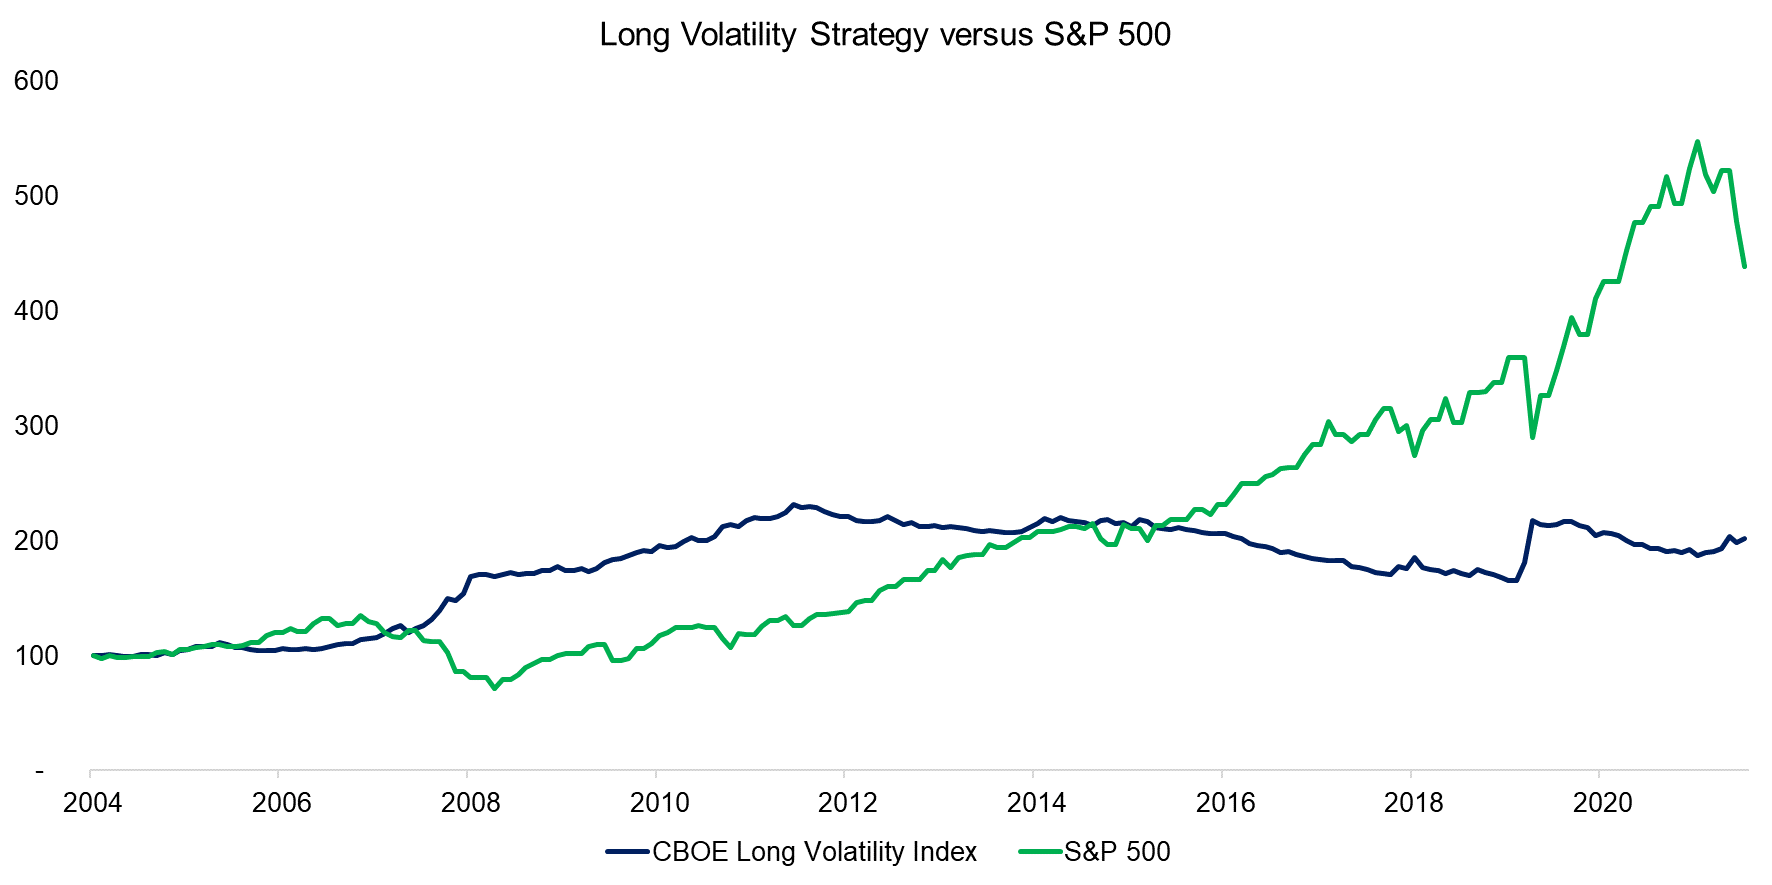 Long Volatility Strategy versus S&P 500